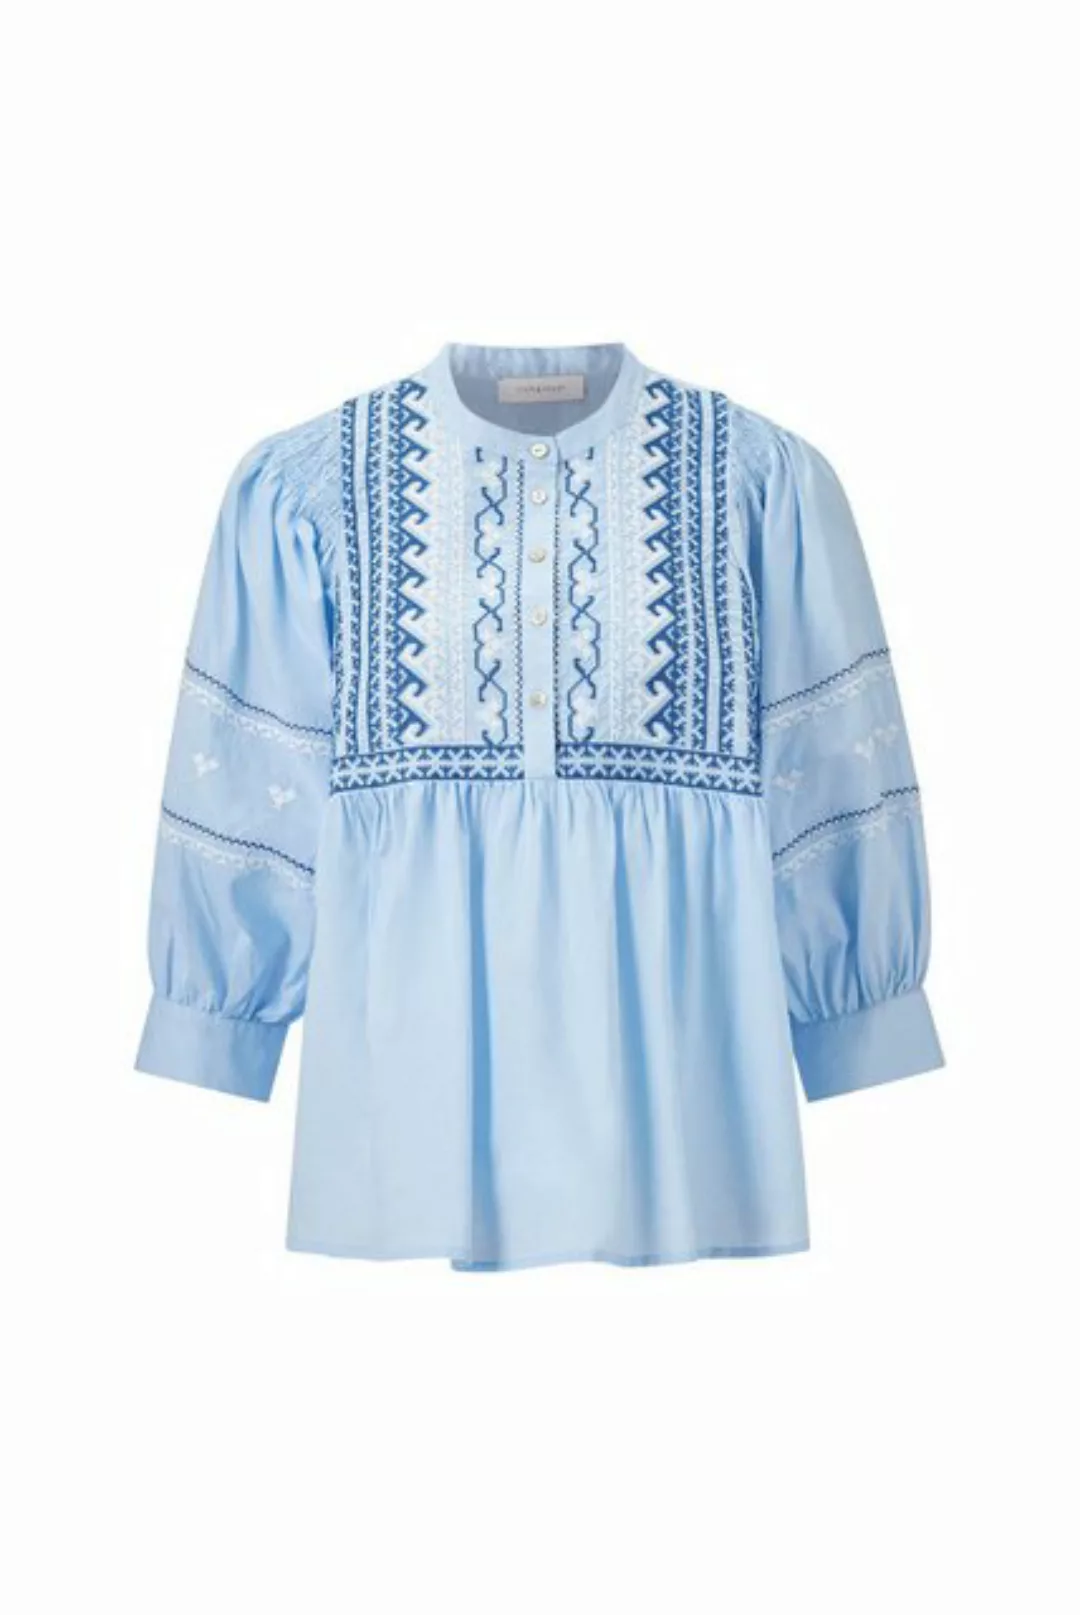 Rich & Royal Blusenshirt blouse with embroidery organic, cotton blue günstig online kaufen